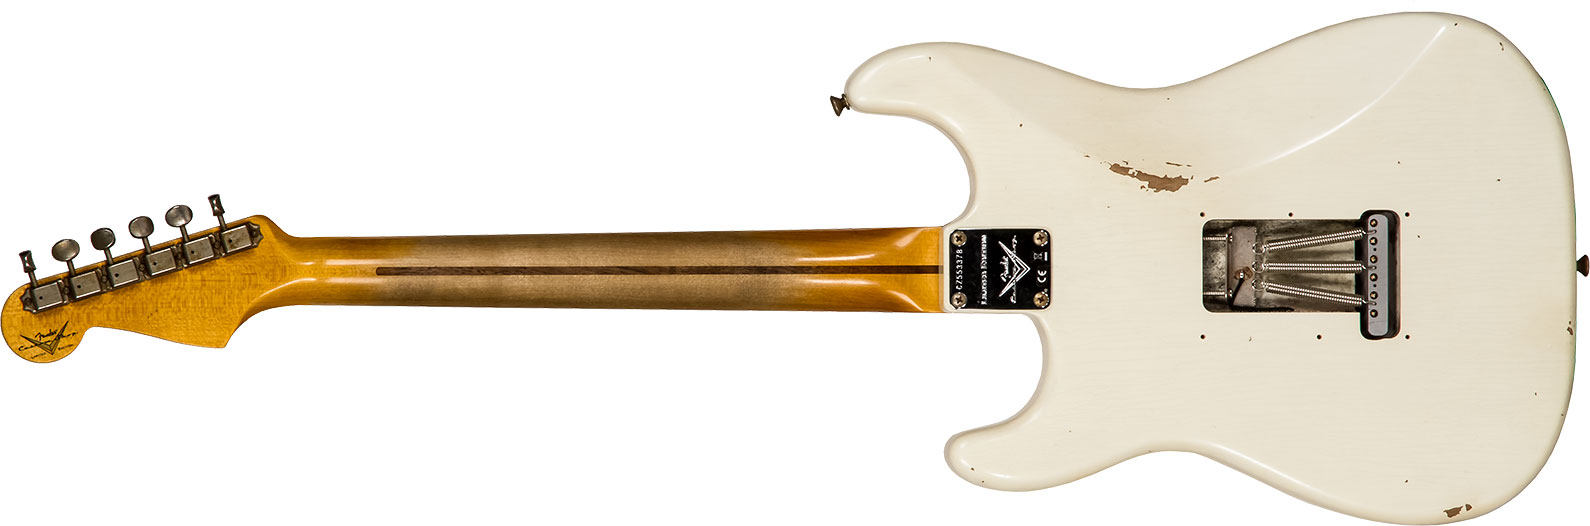 Fender Custom Shop Strat Poblano Ii 3s Trem Mn #cz555378 - Relic Olympic White - Elektrische gitaar in Str-vorm - Variation 1